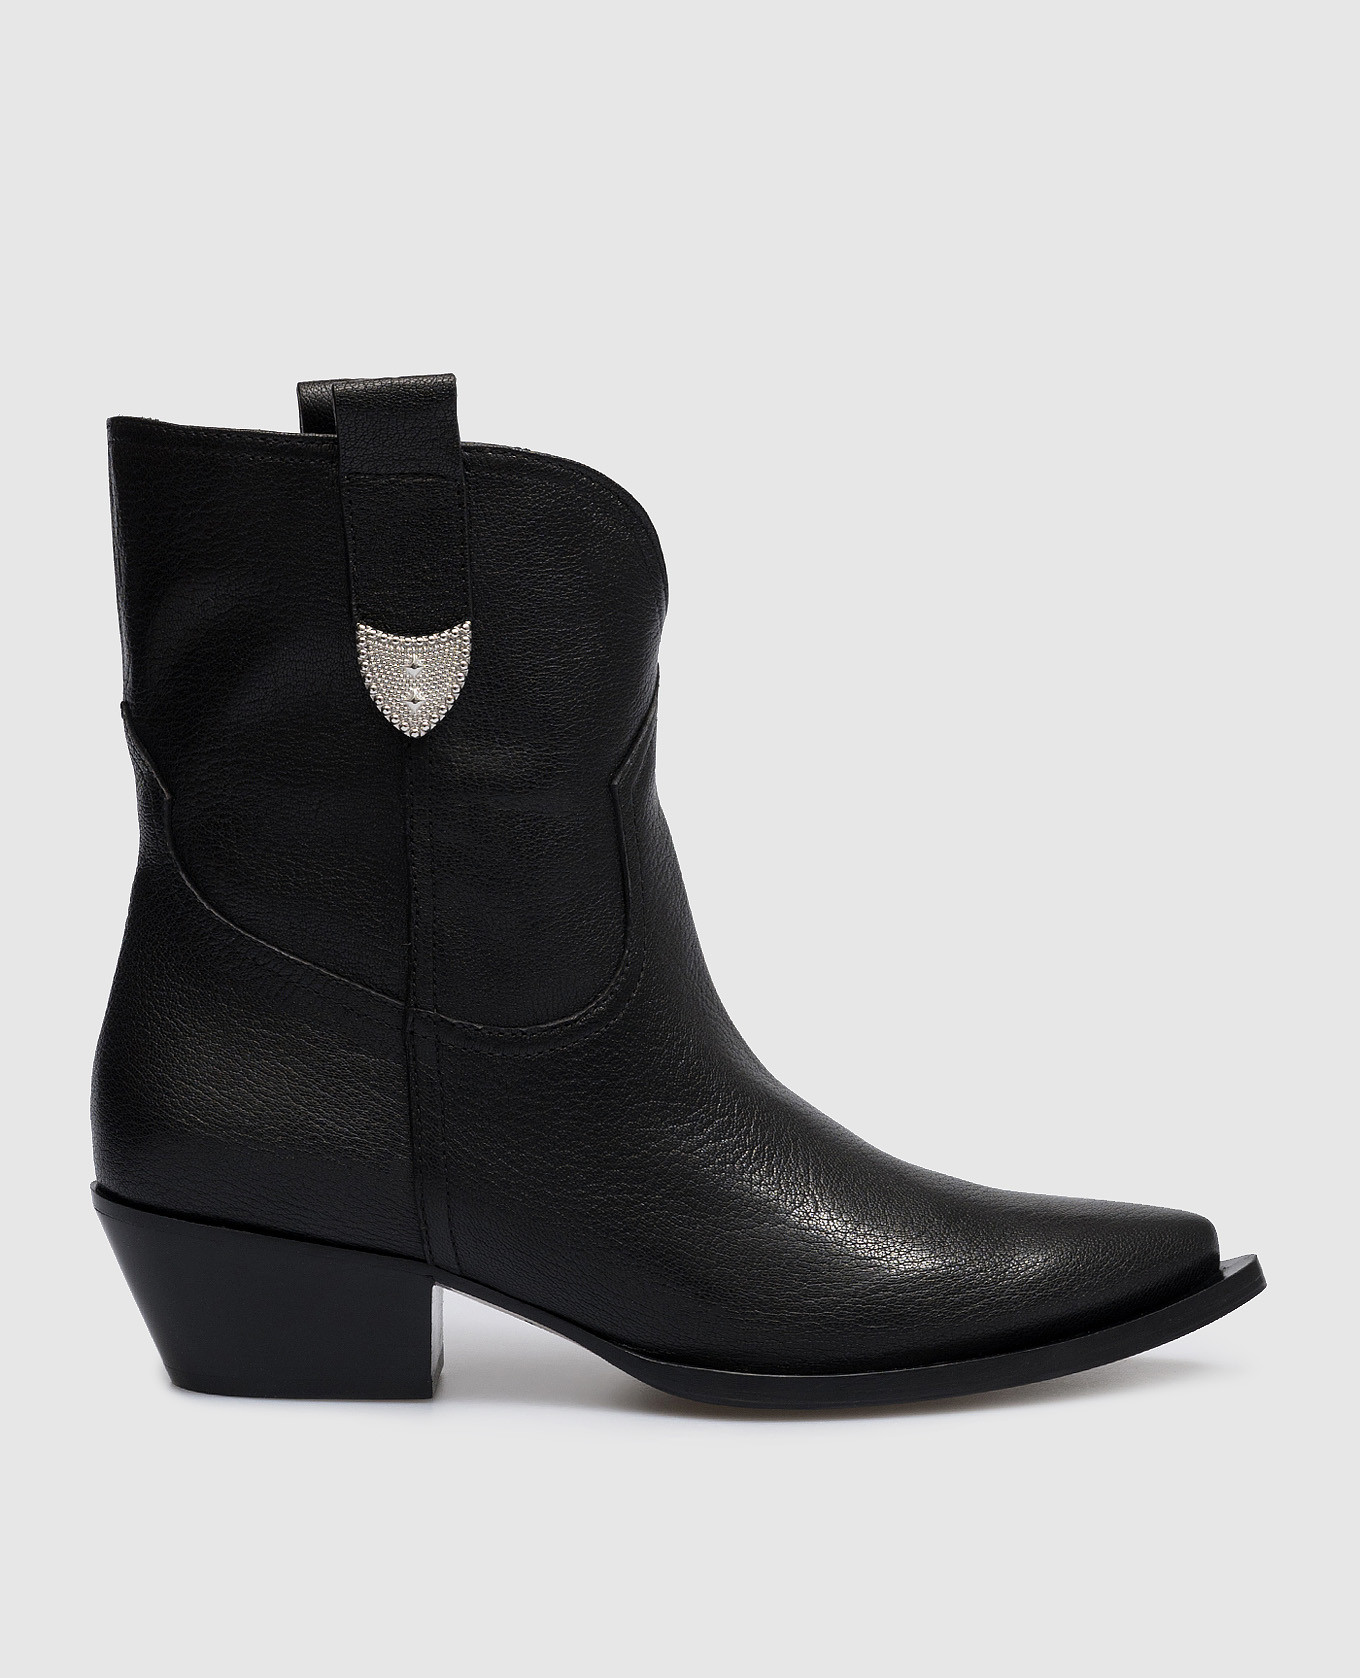 Paris black leather boots with metal details